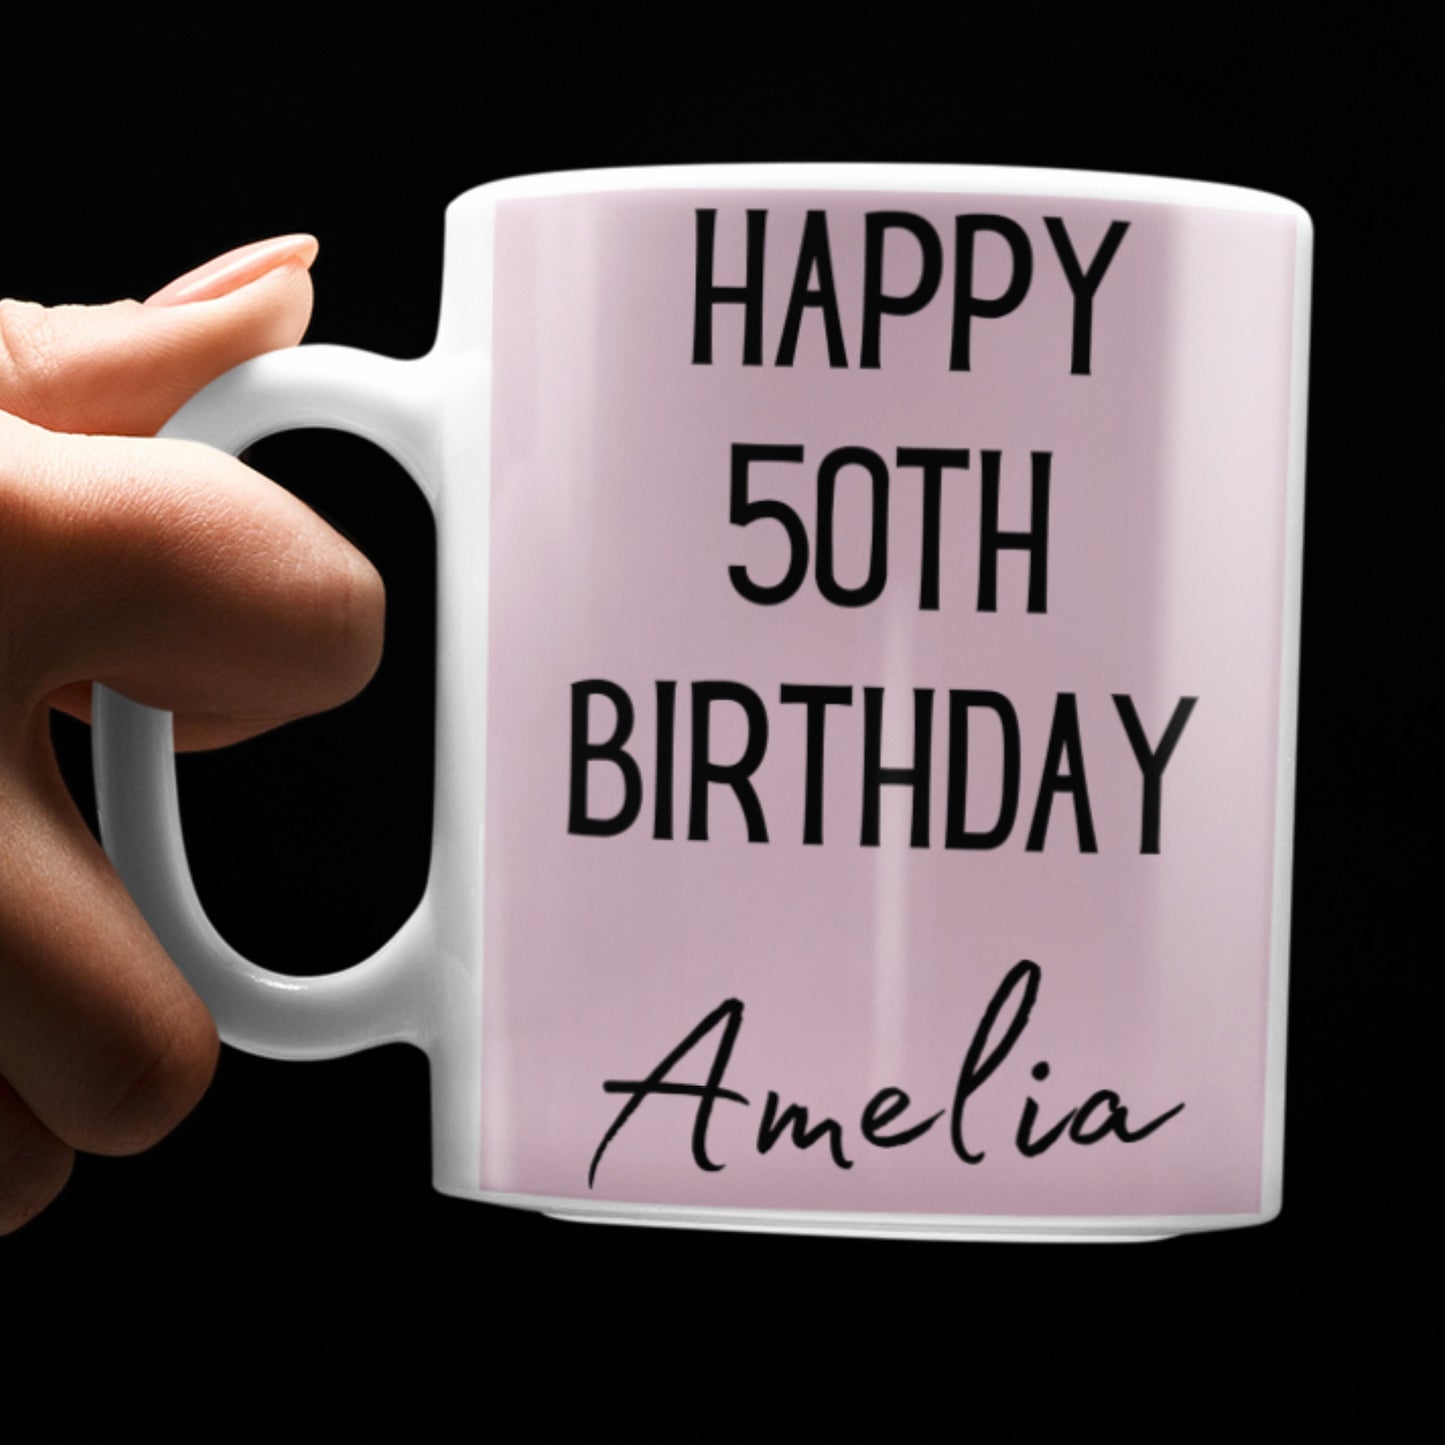 Personalised pink 40th Birthday mug